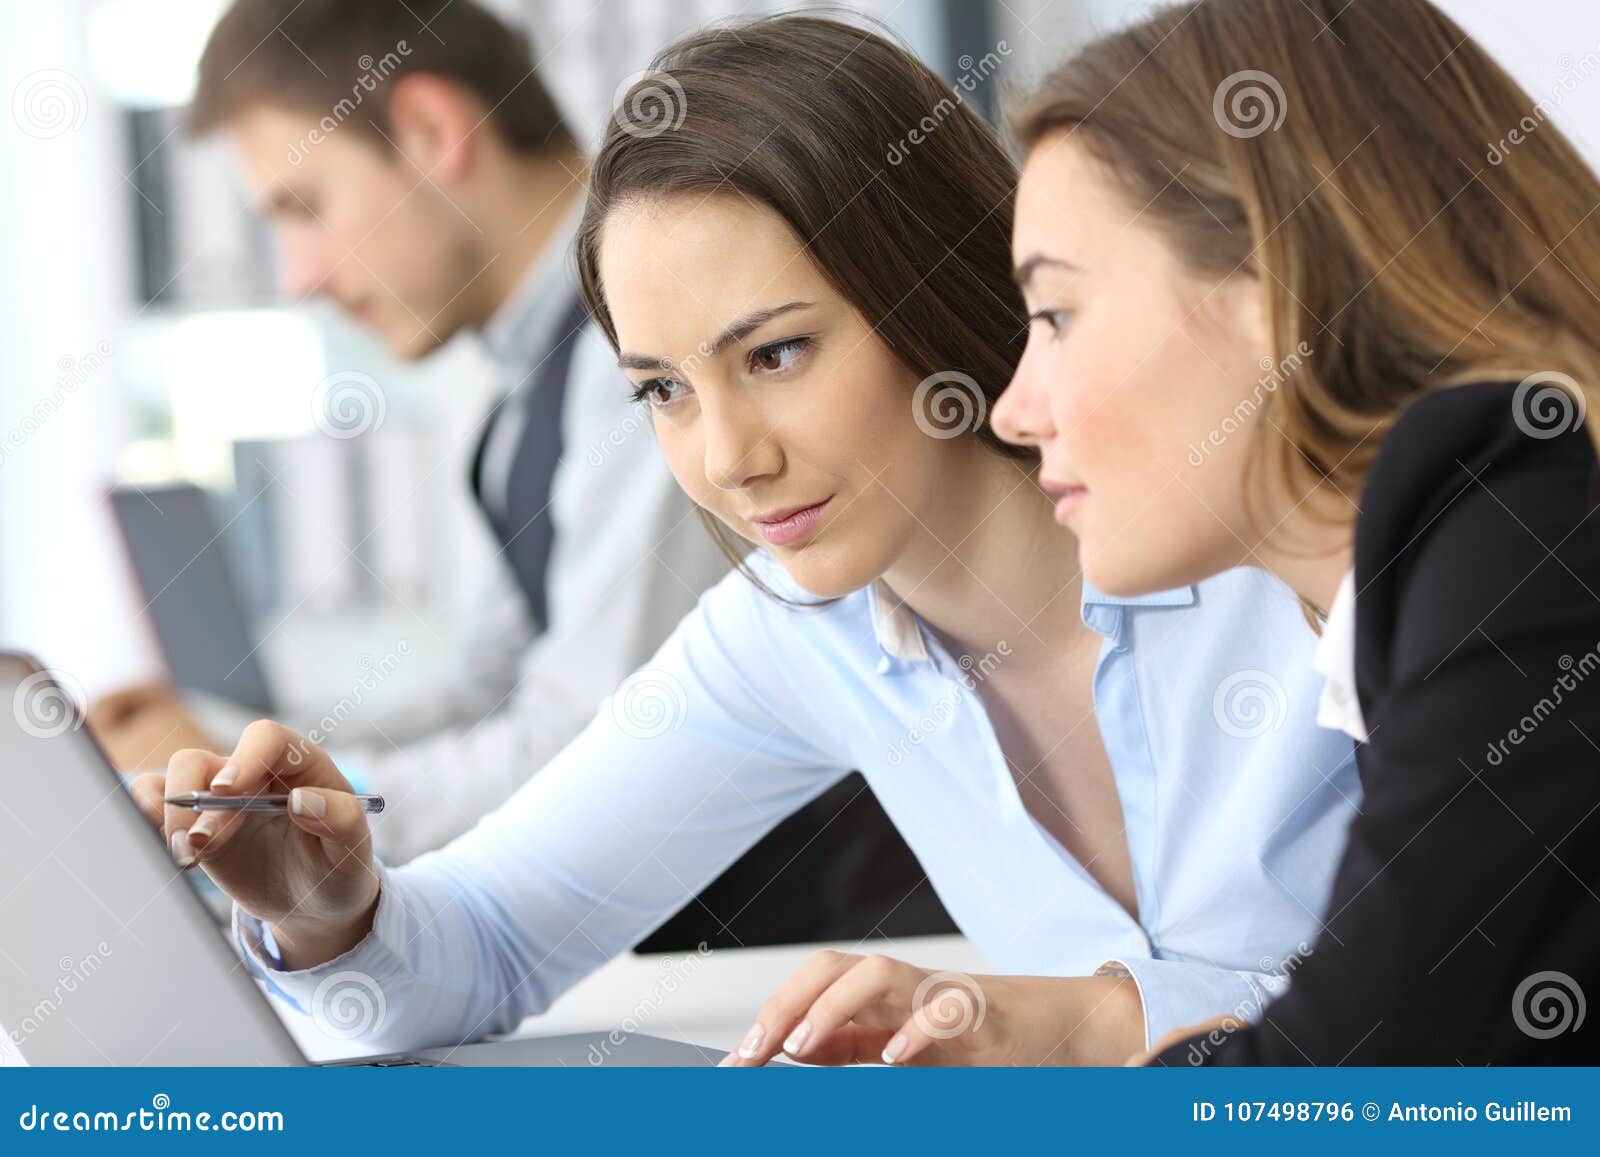 businesswomen working on line together